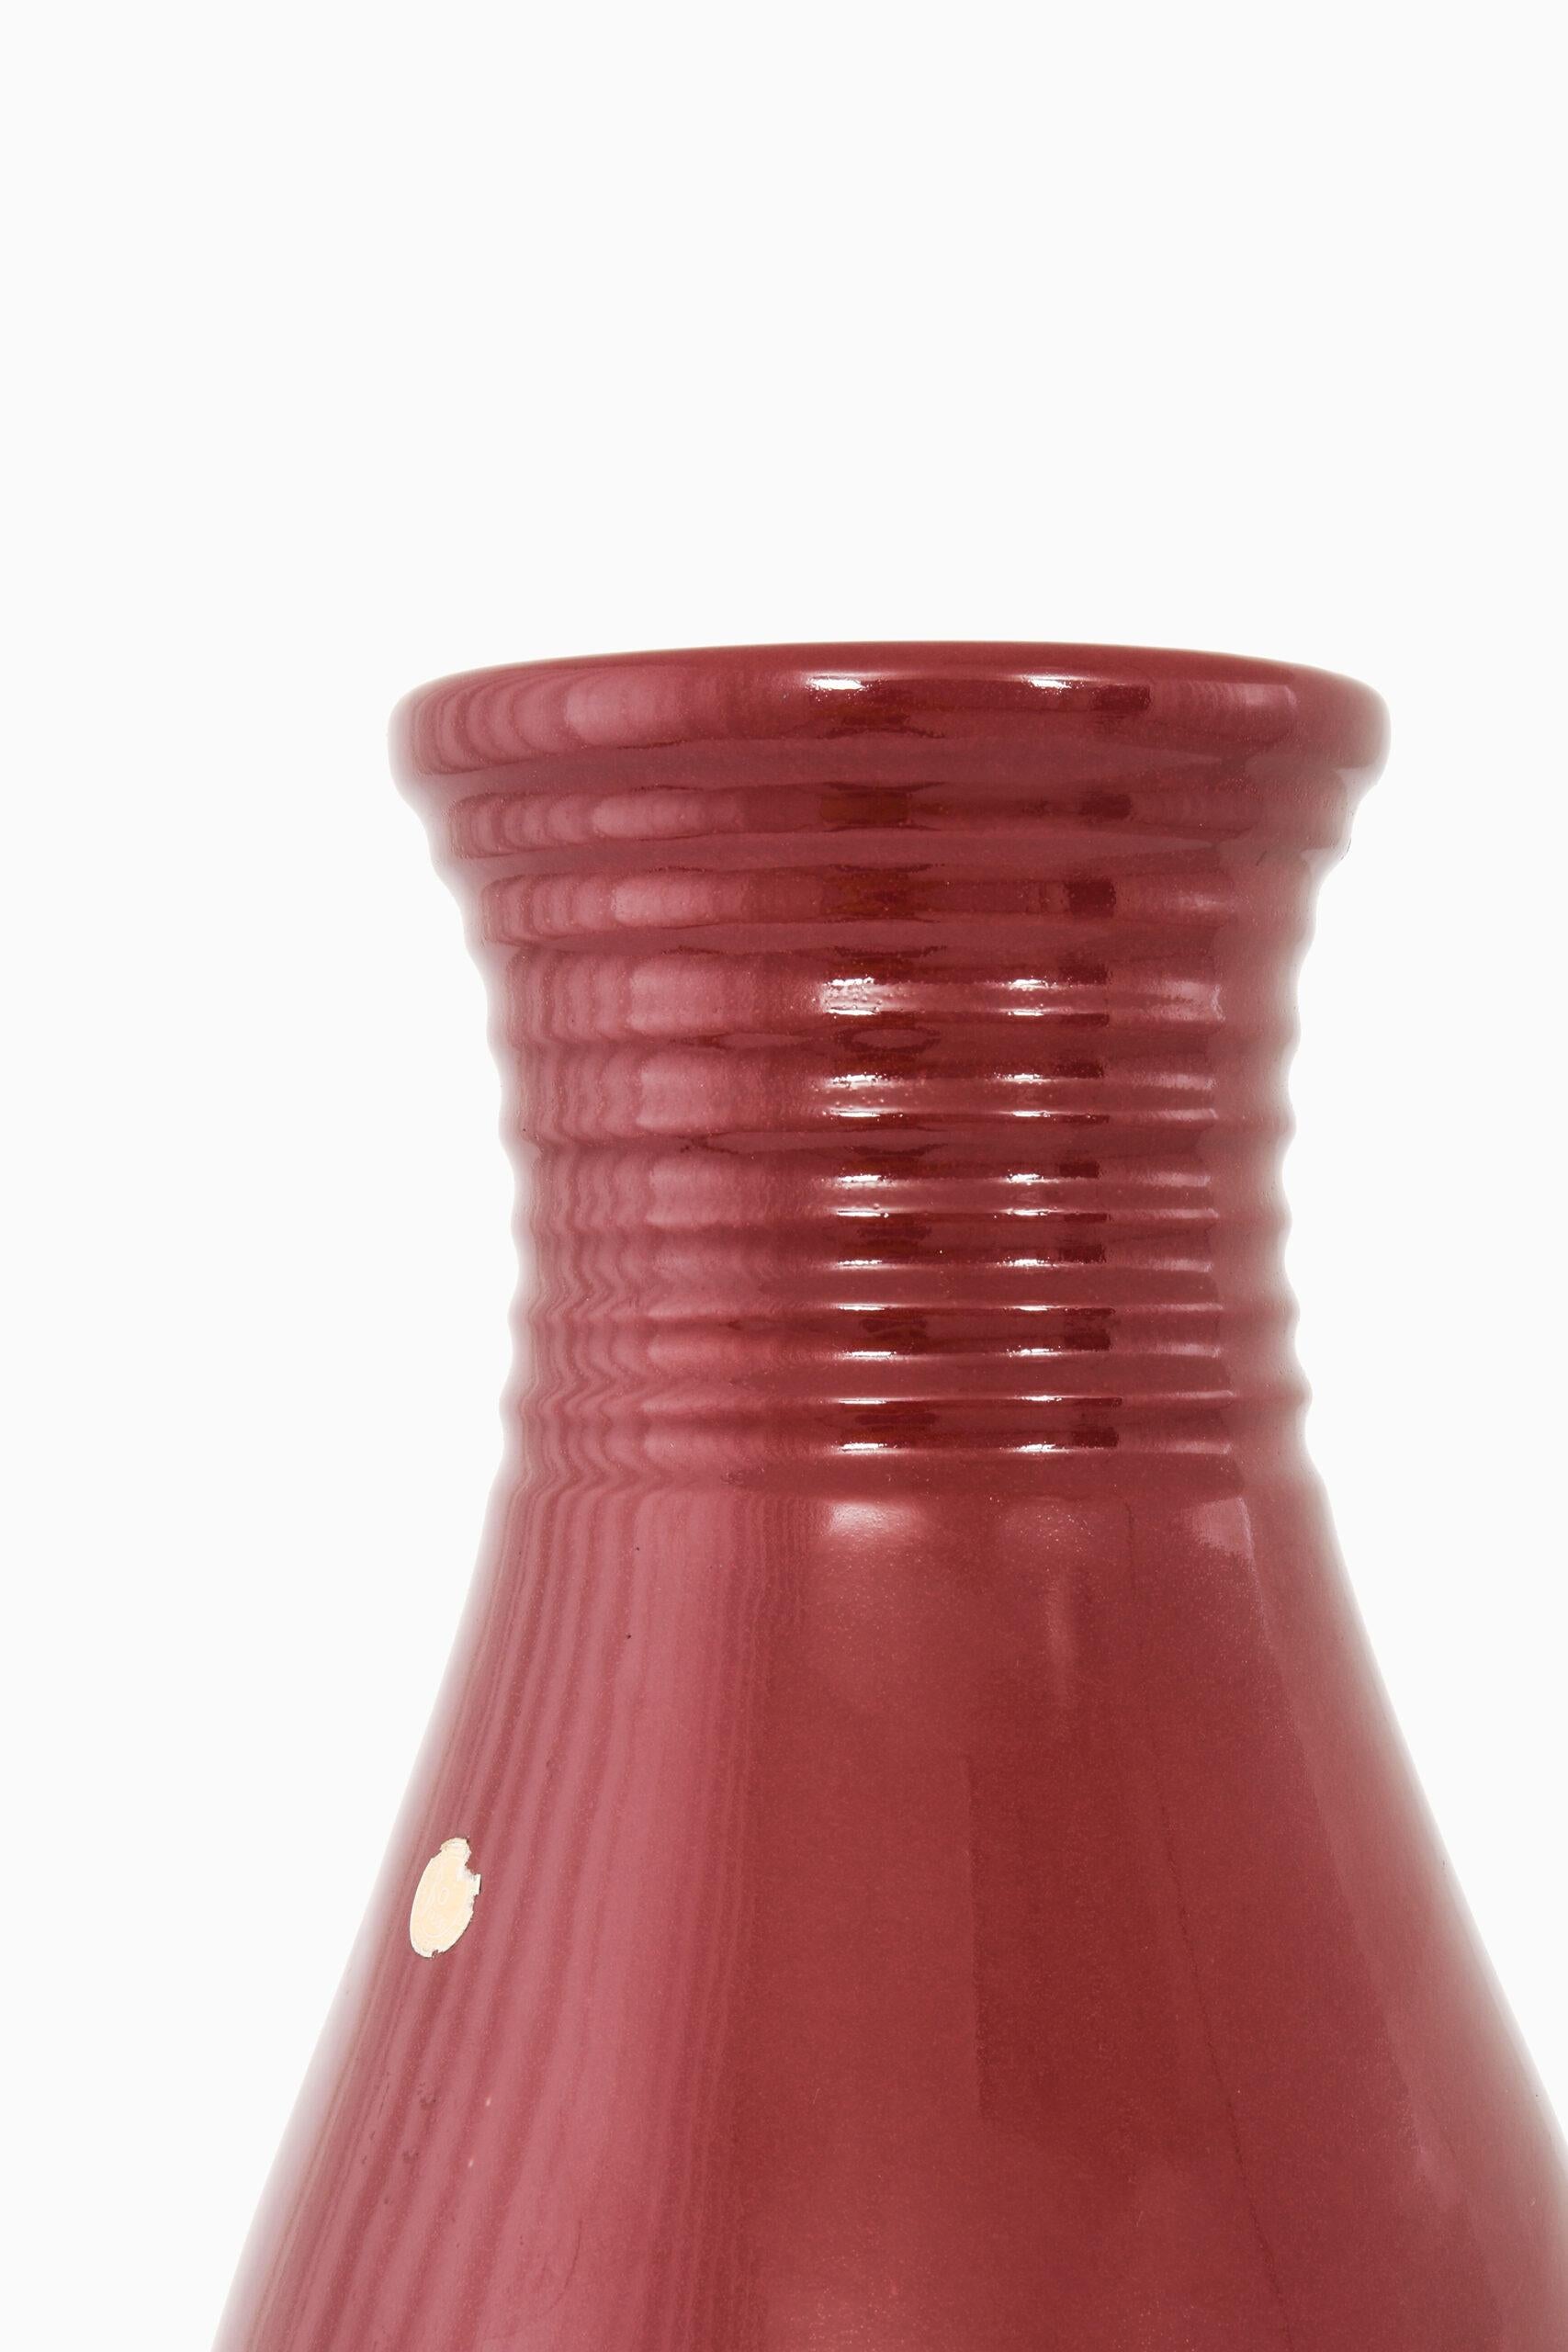 Glazed ceramic floor vase designed by Ewald Dahlskog. Produced by Bobergs Fajansfabrik in Sweden.